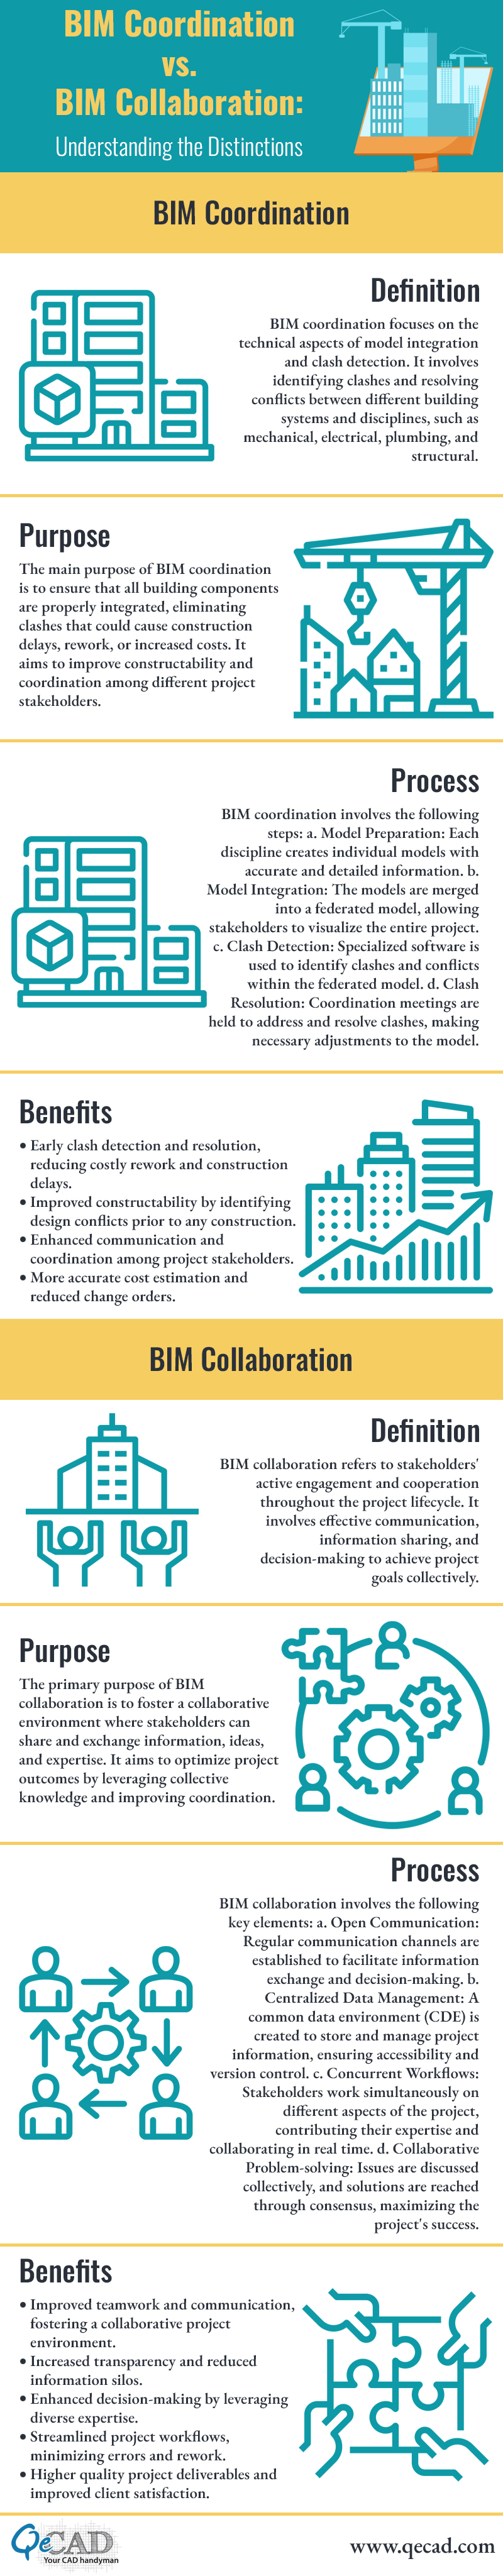 BIM Coordination vs. BIM Collaboration: An Insightful Comparison